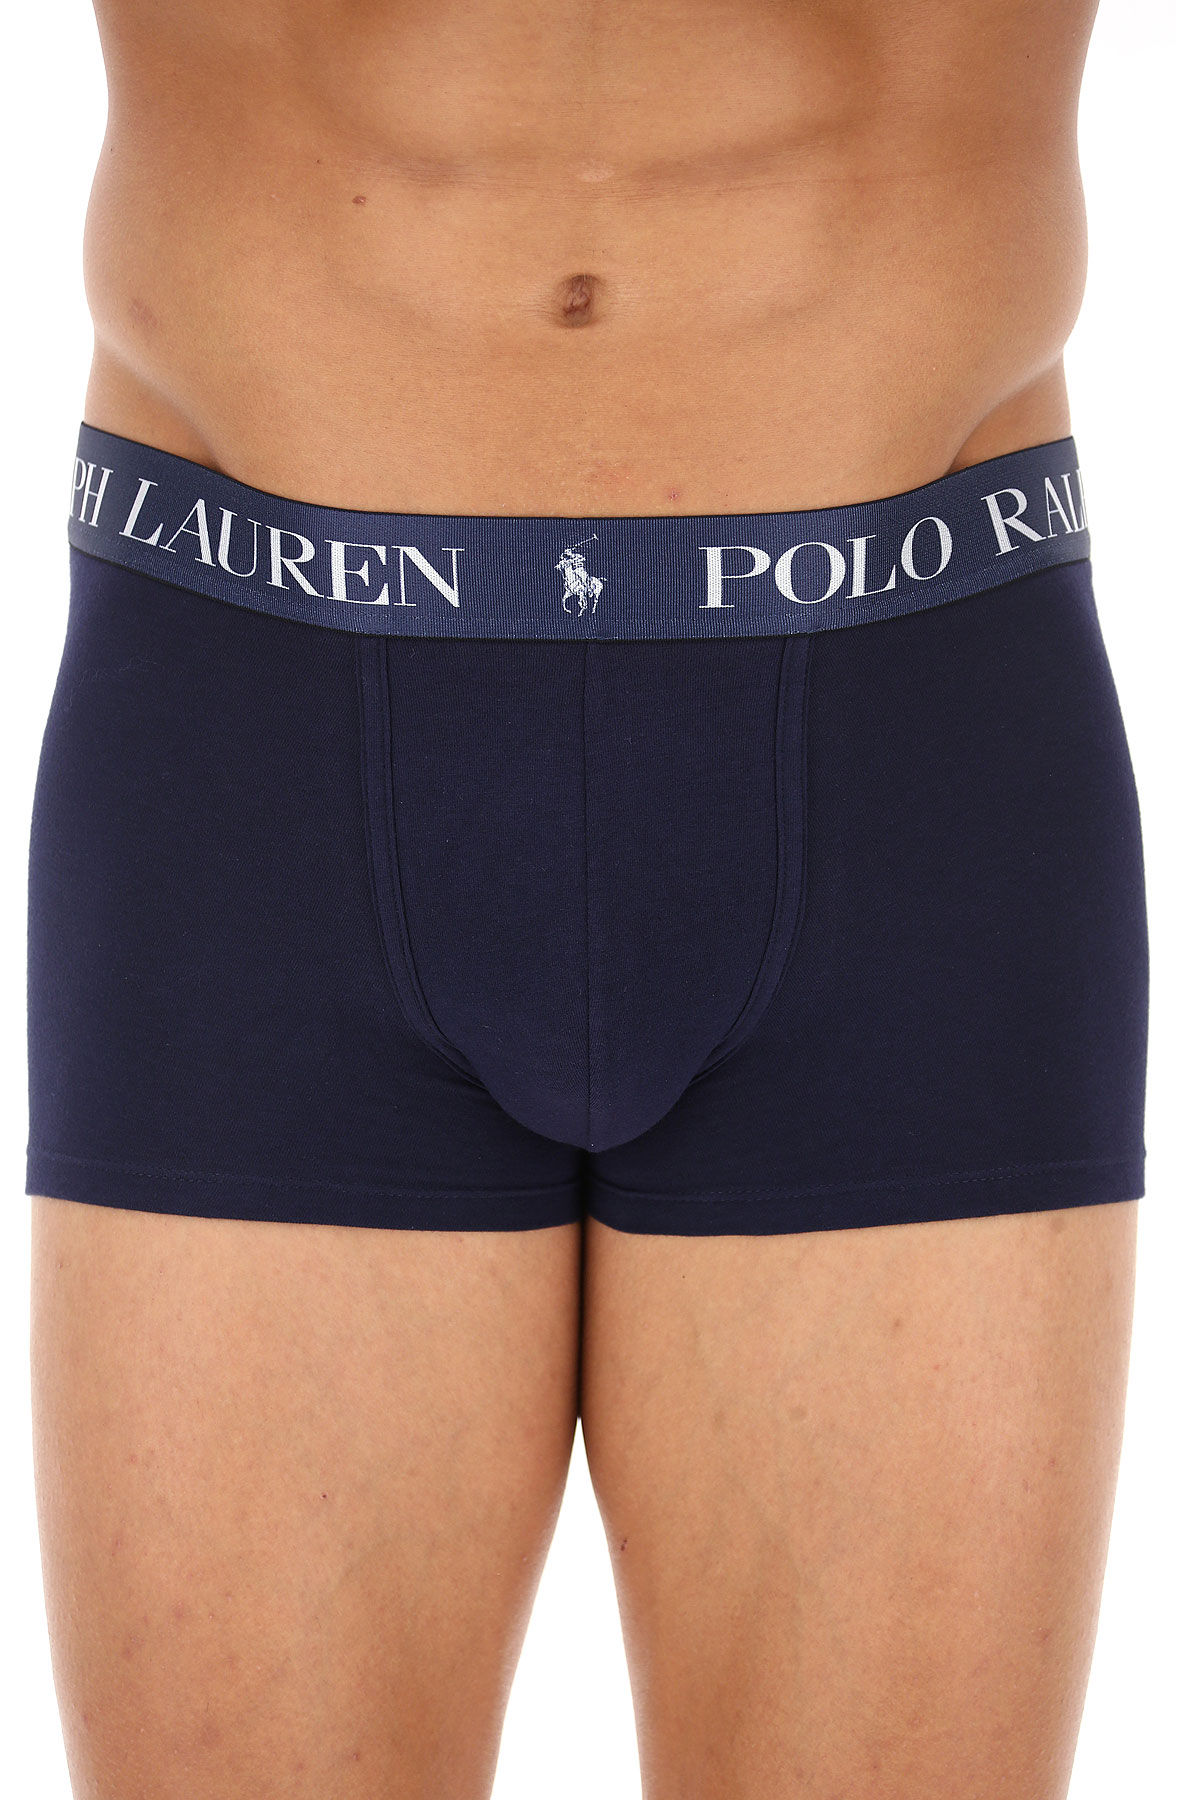 Mens Underwear Ralph Lauren, Style code: 714661553013--